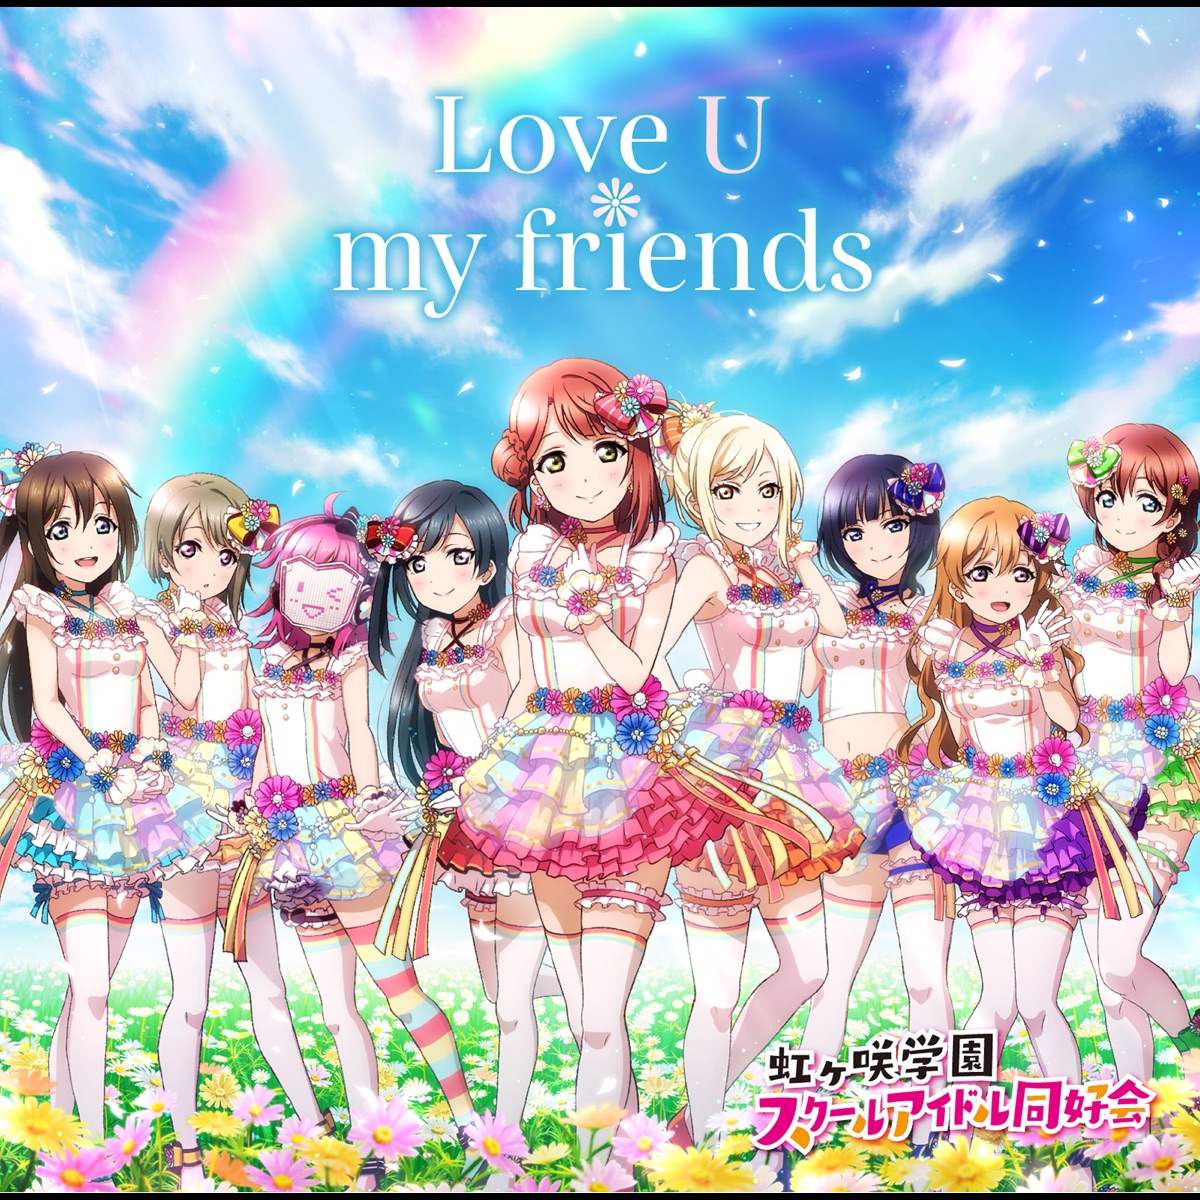 Cover for『Setsuna Yuki (Tomori Kusunoki) - MELODY』from the release『Love U my friends』